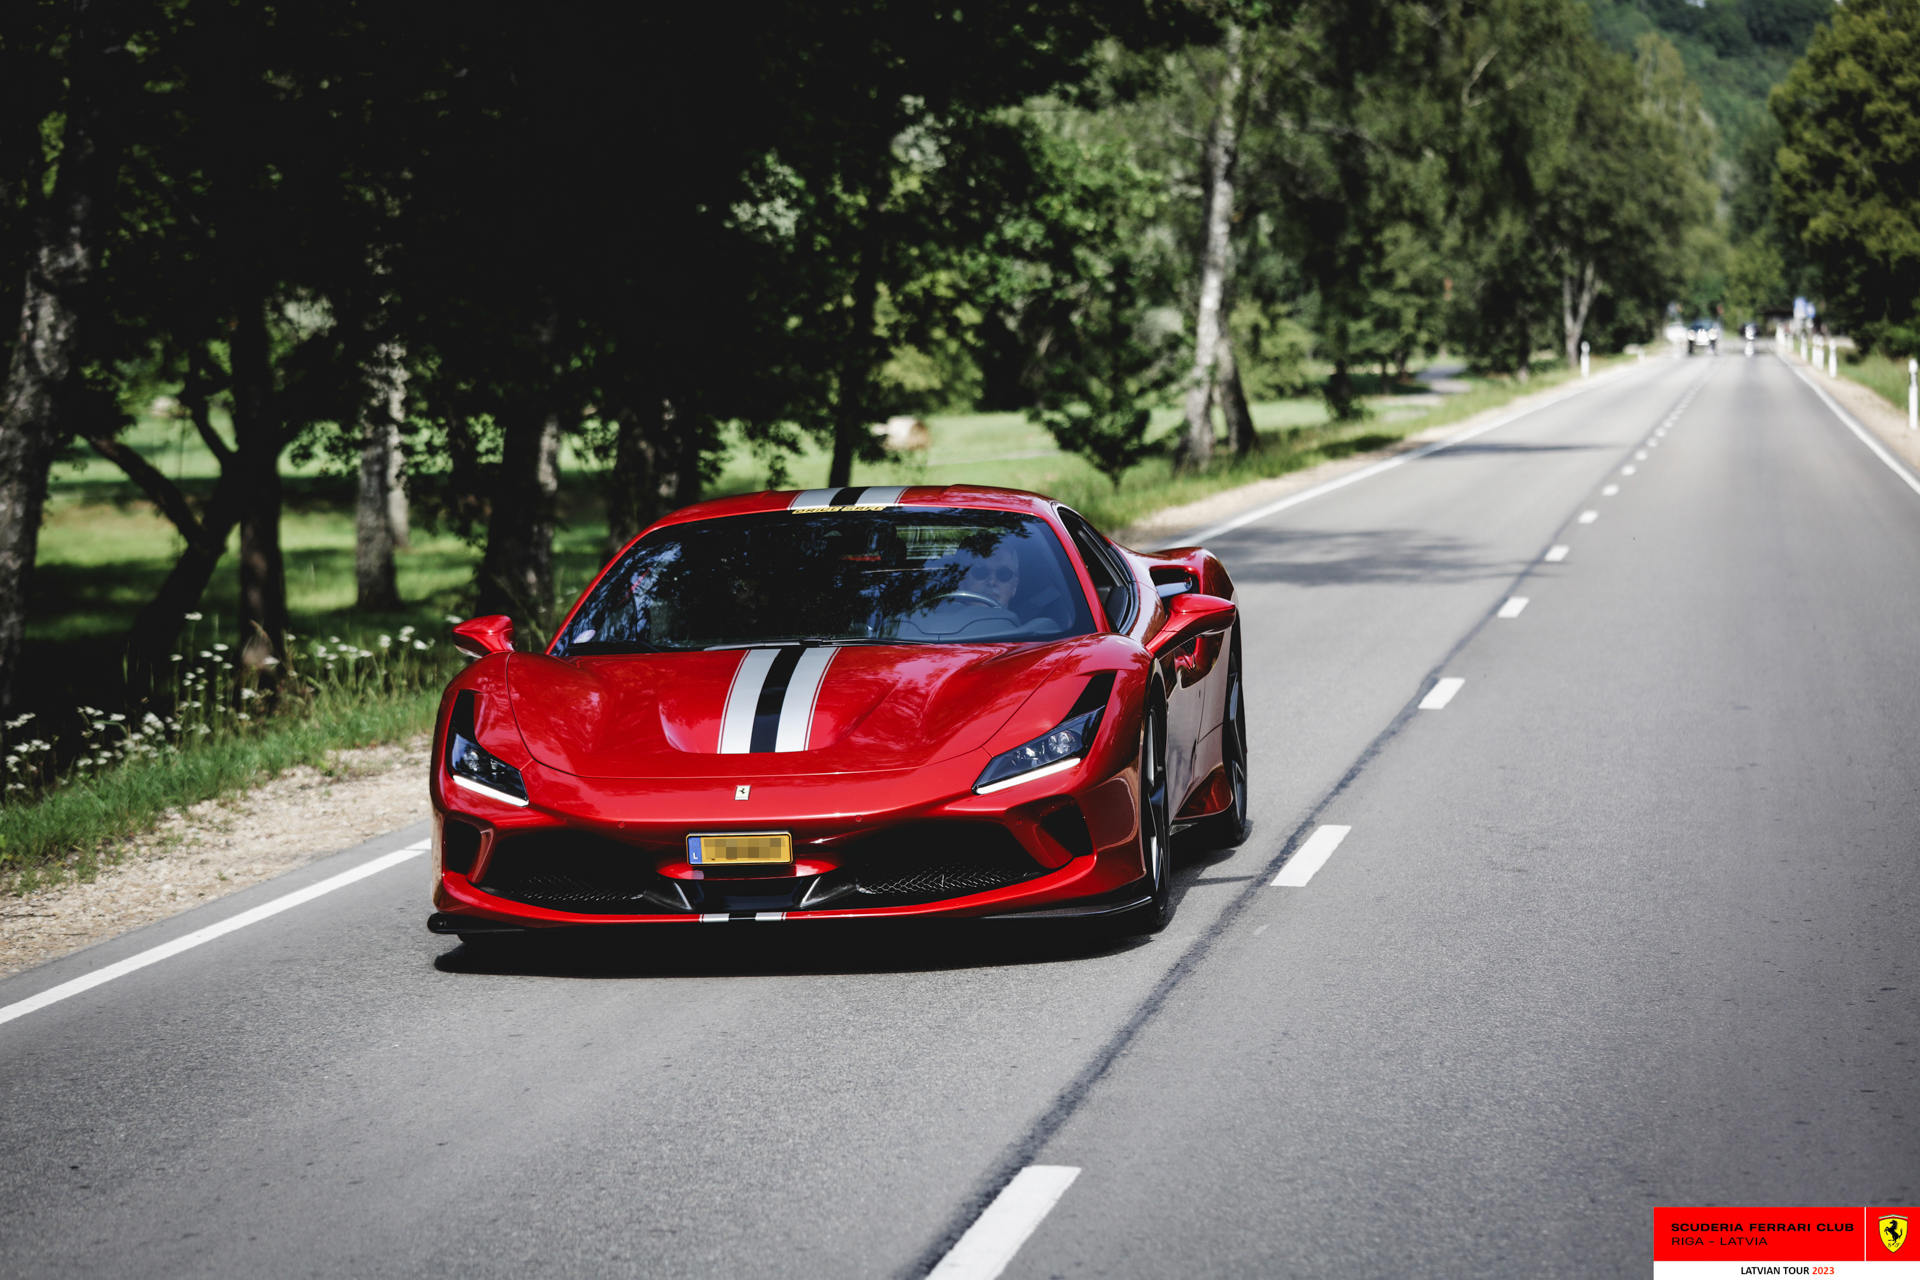 A red Ferrari en route to Cesis.